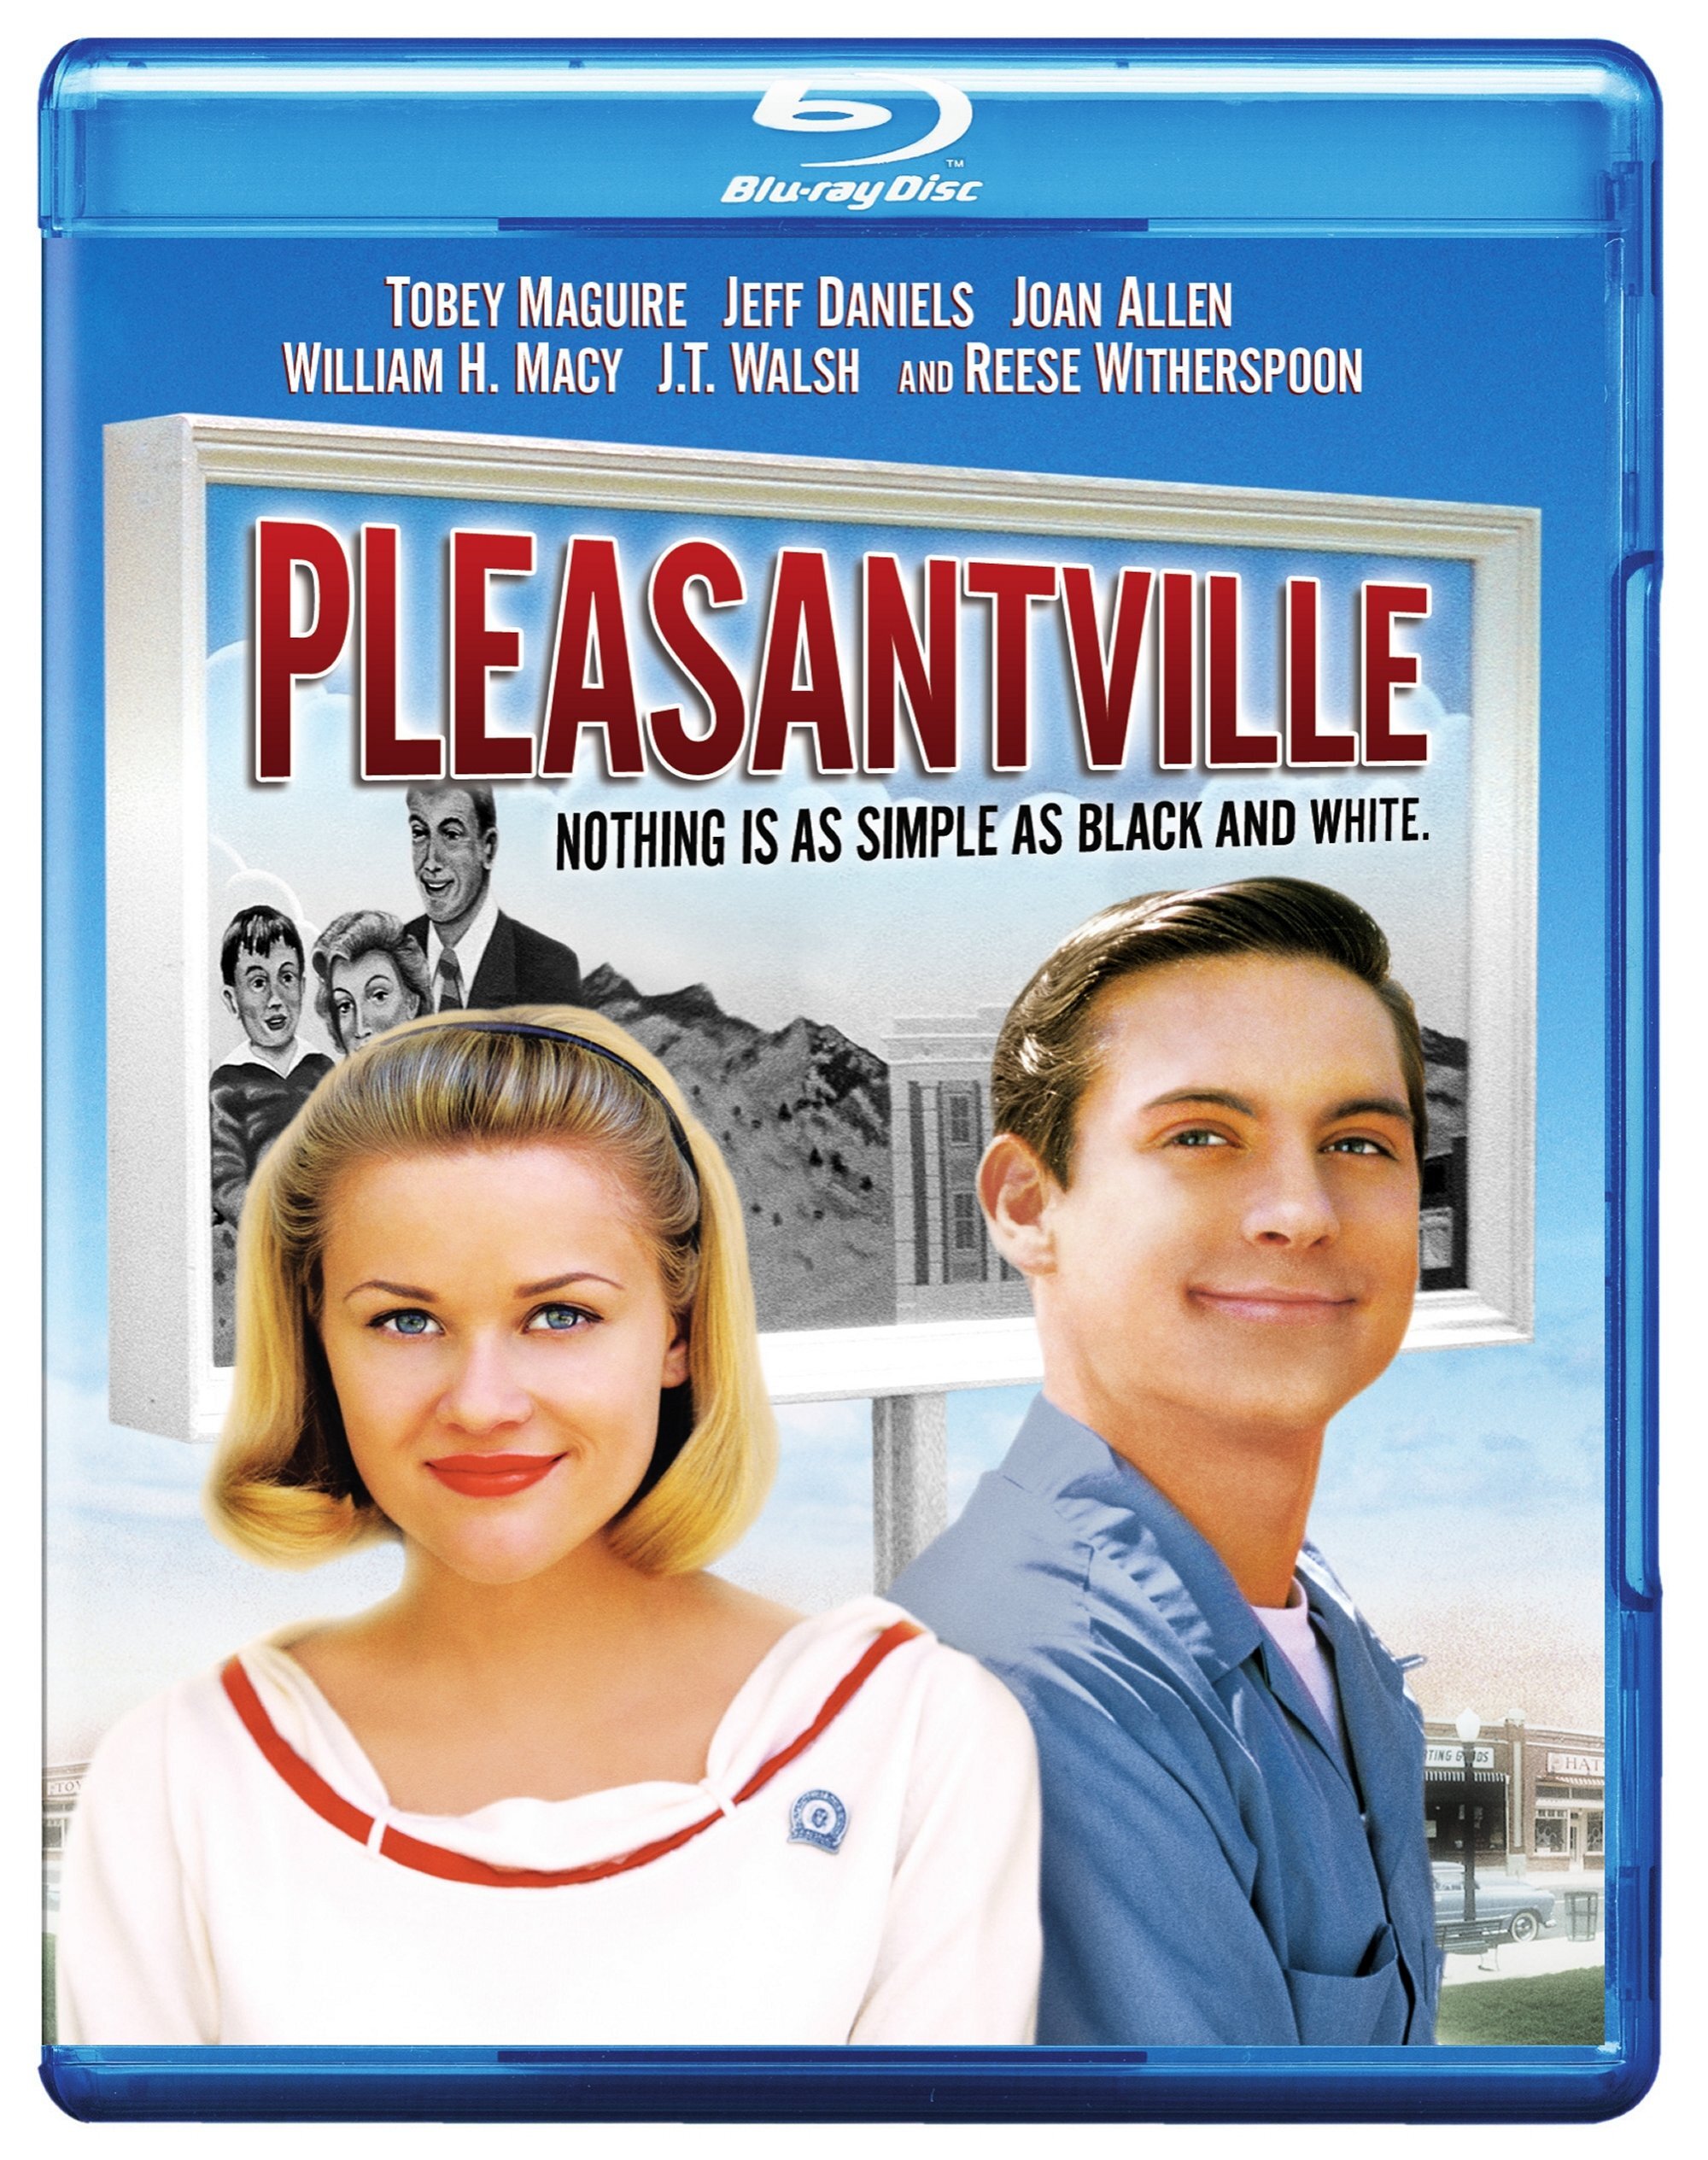 Pleasantville - Blu-ray [ 1998 ]  - Comedy Movies On Blu-ray - Movies On GRUV